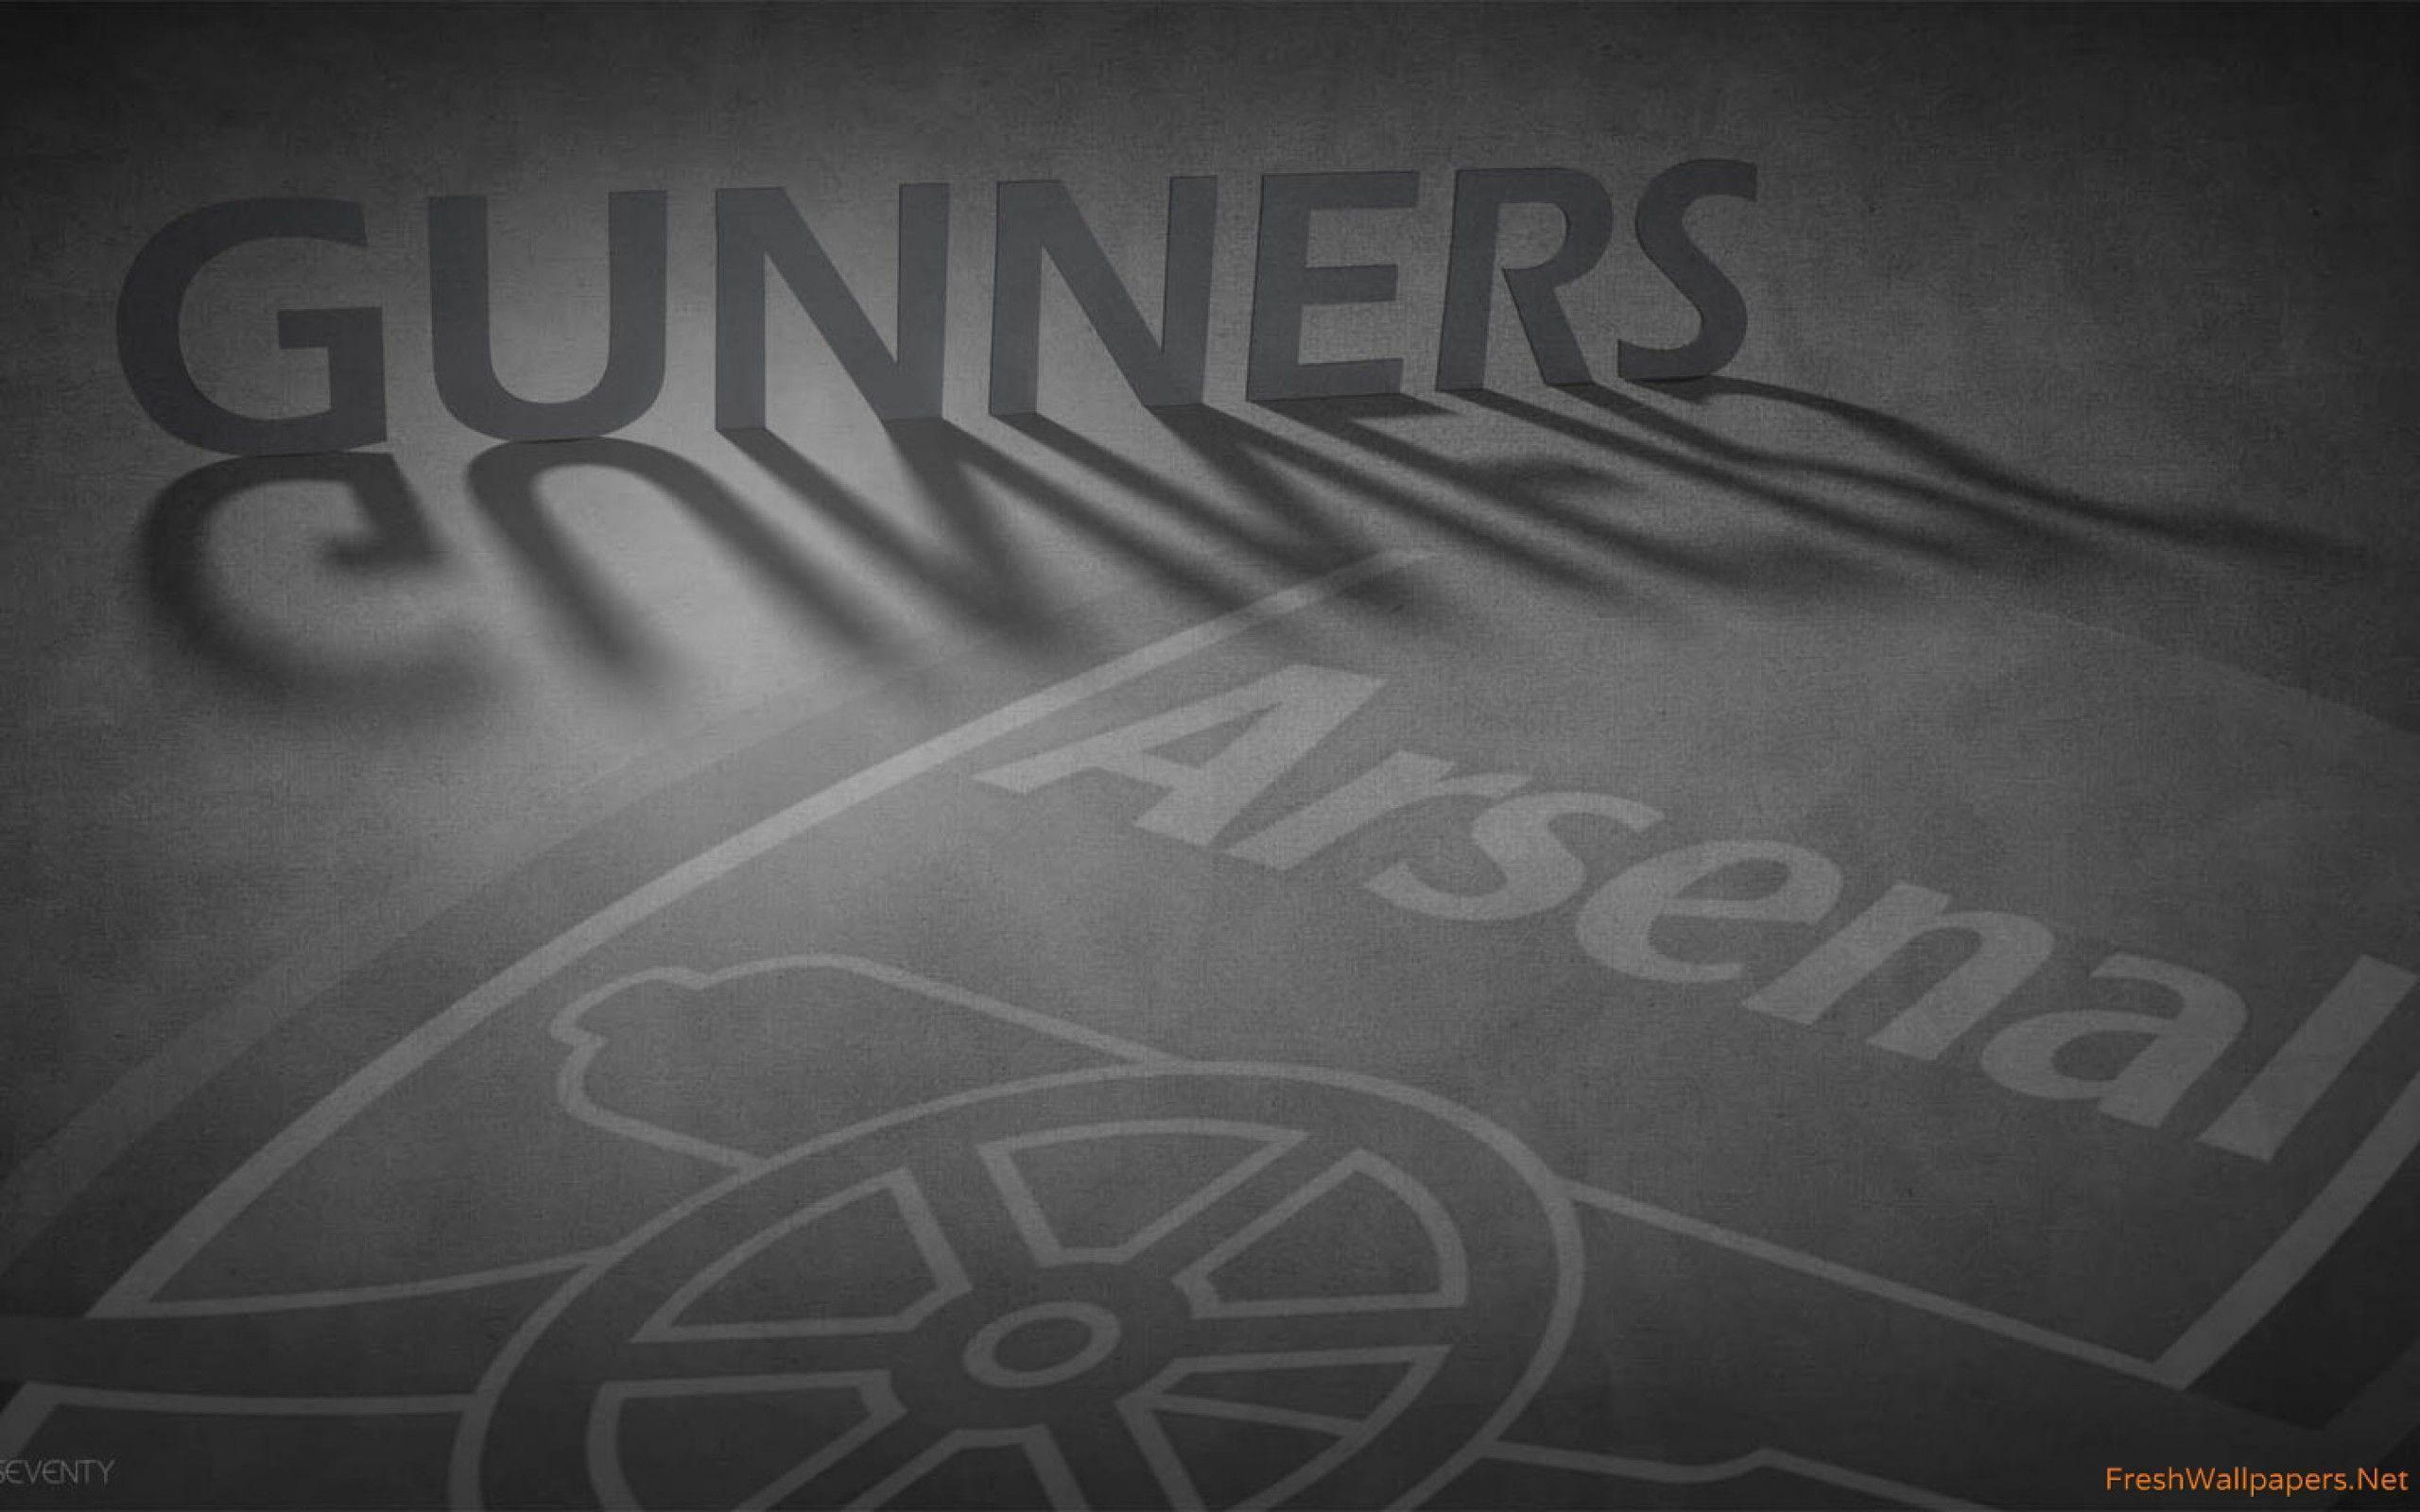 Arsenal Logo Wallpaper 2016